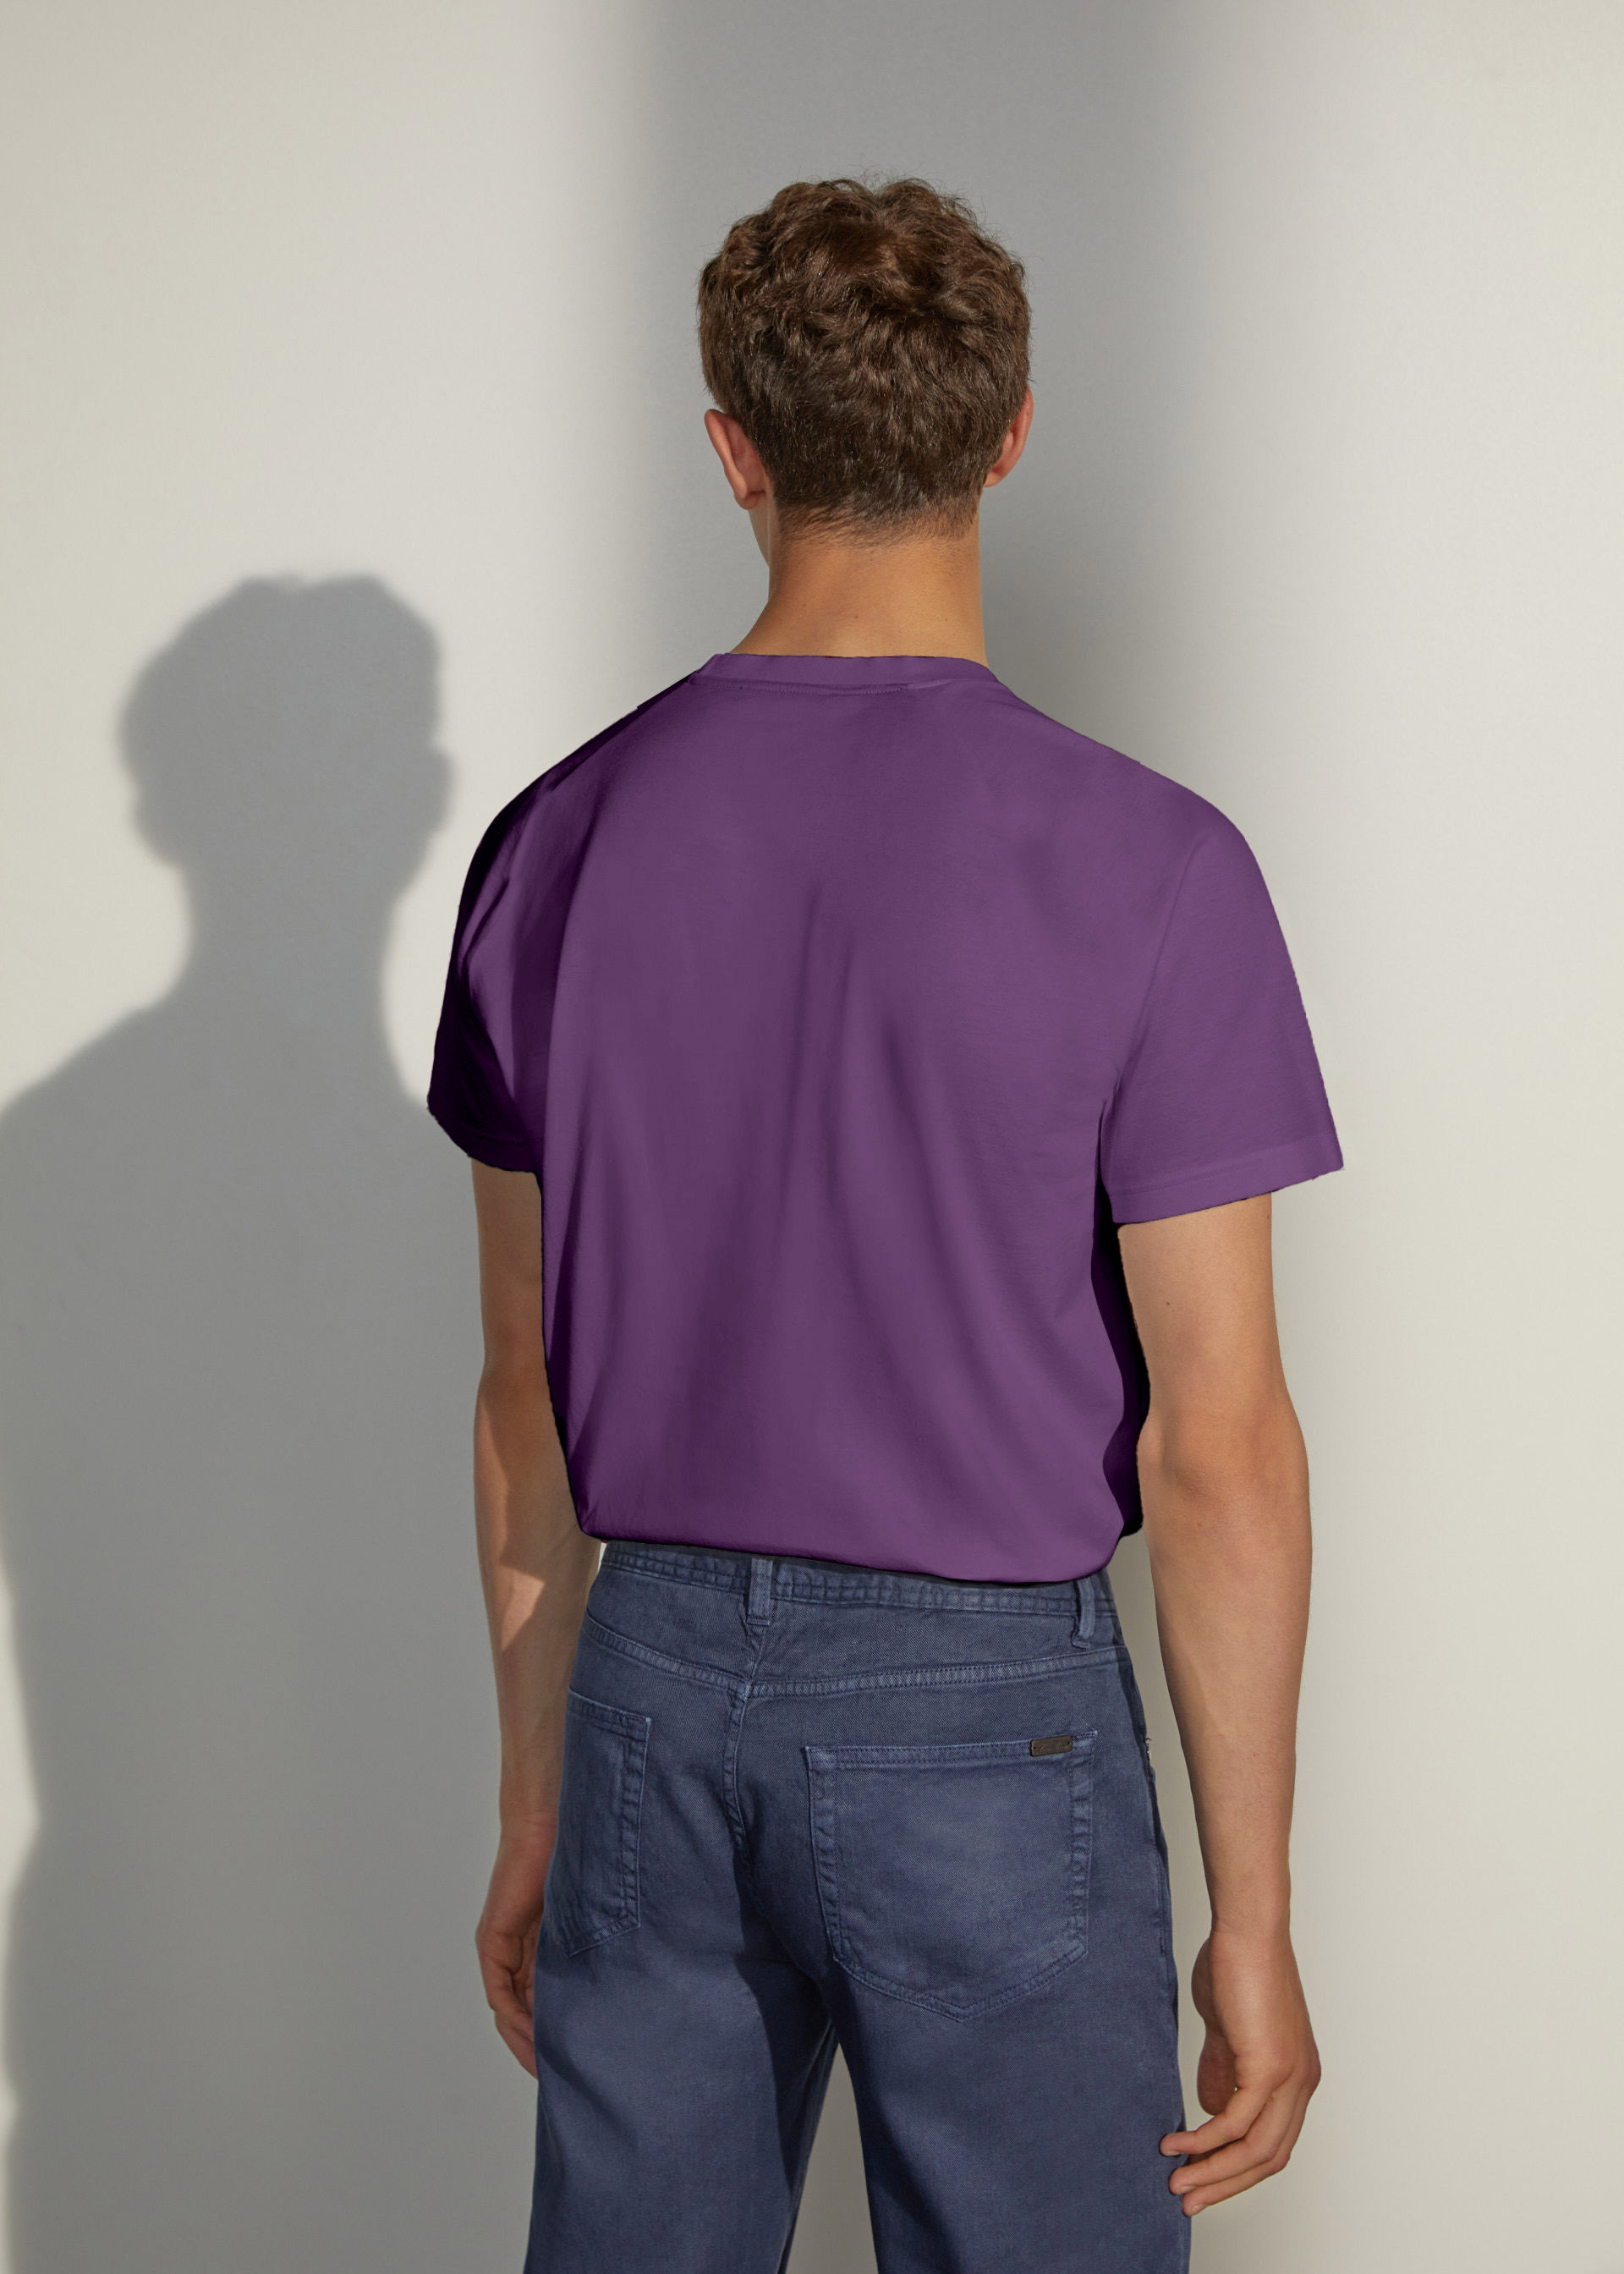 Men's Half Sleeves Round Neck T-Shirt | Casual Wear T-Shirt